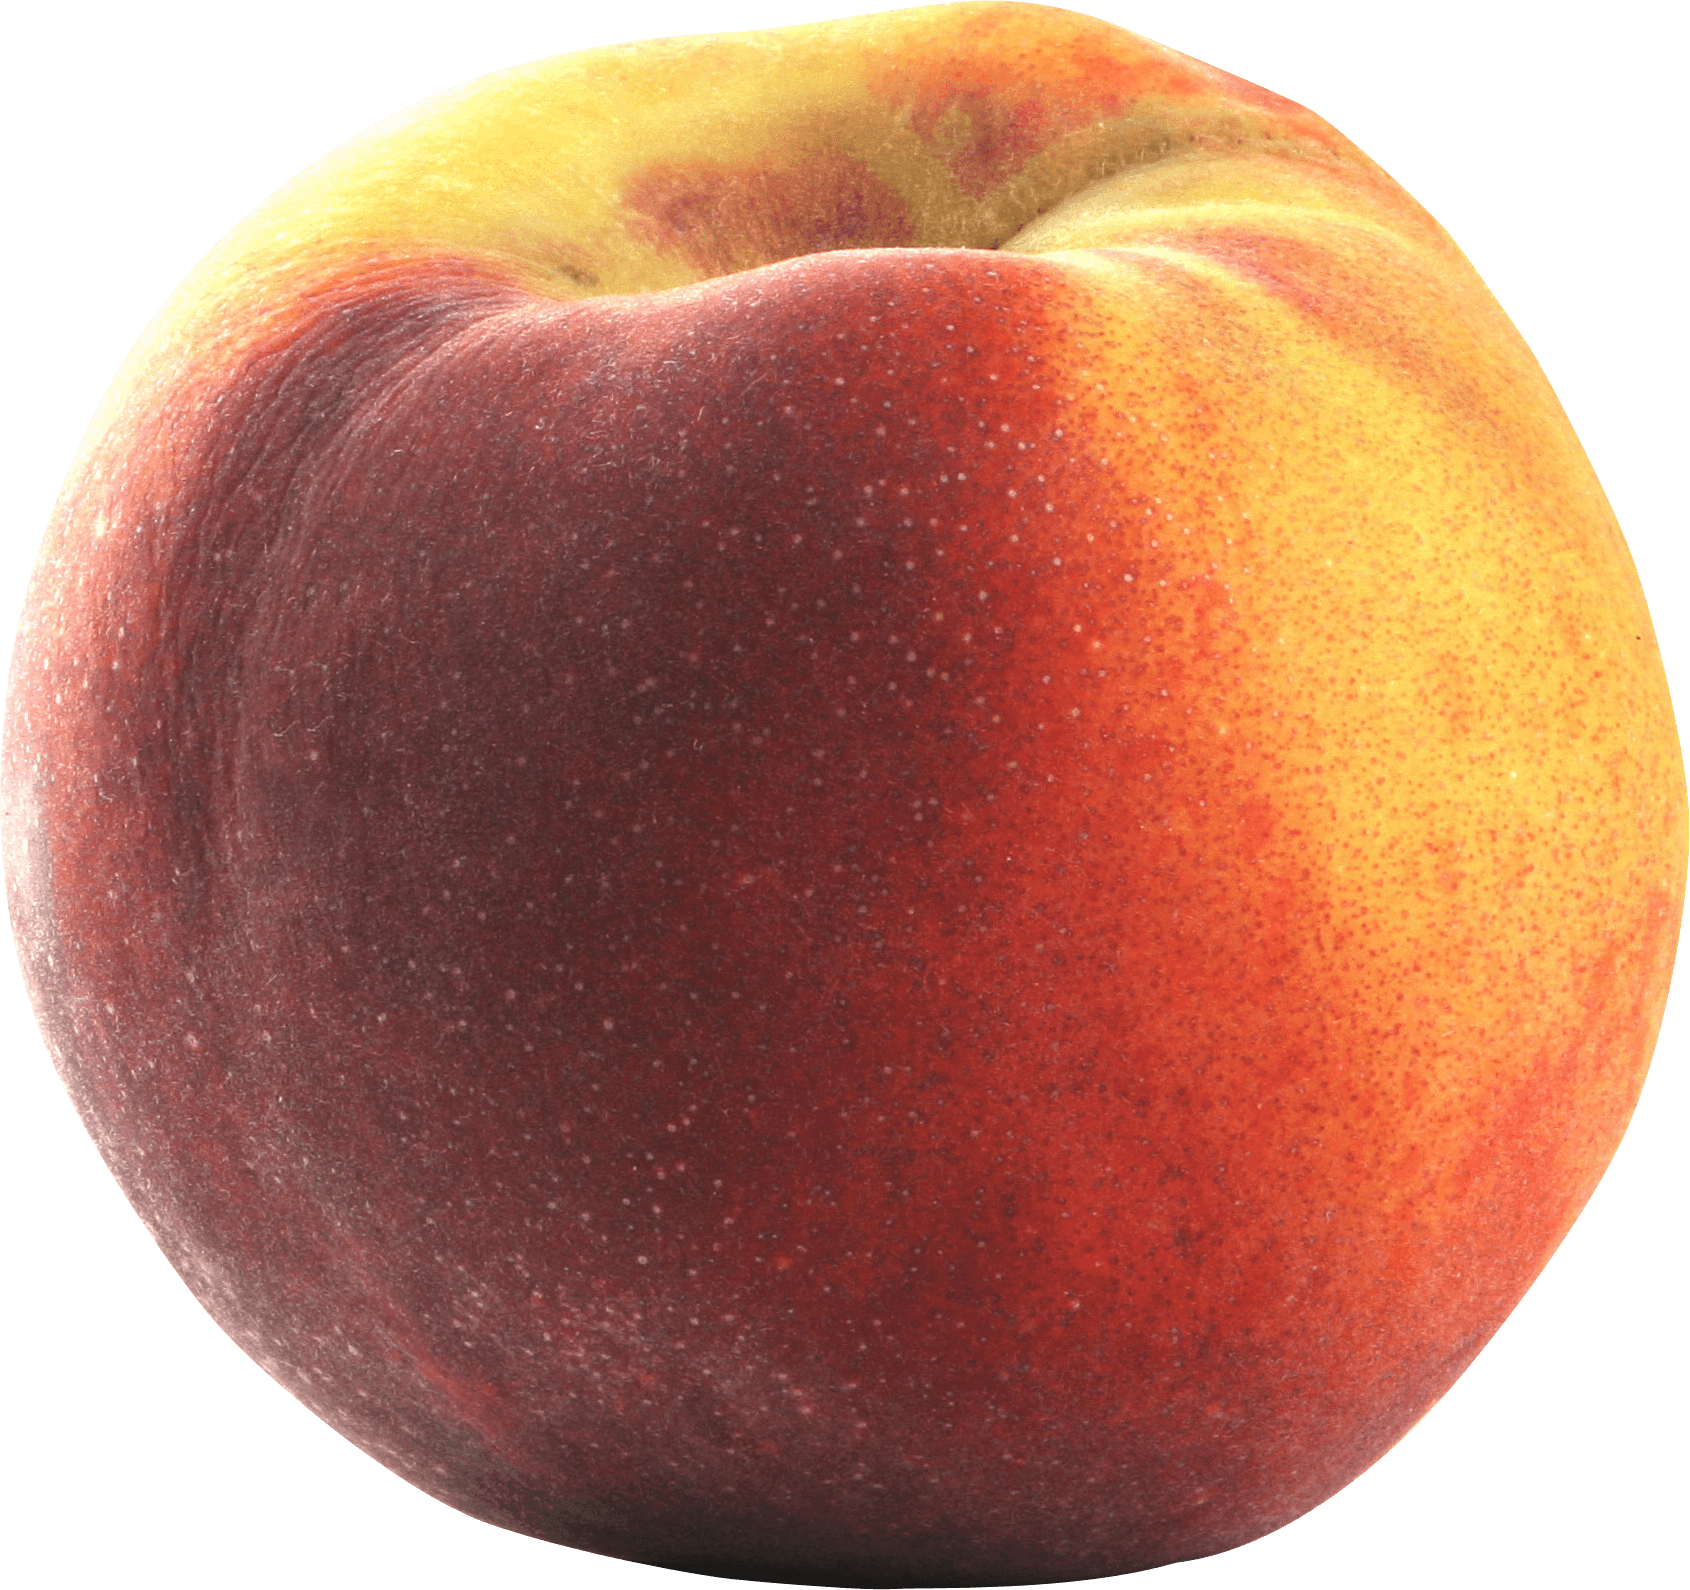 peaches clipart large